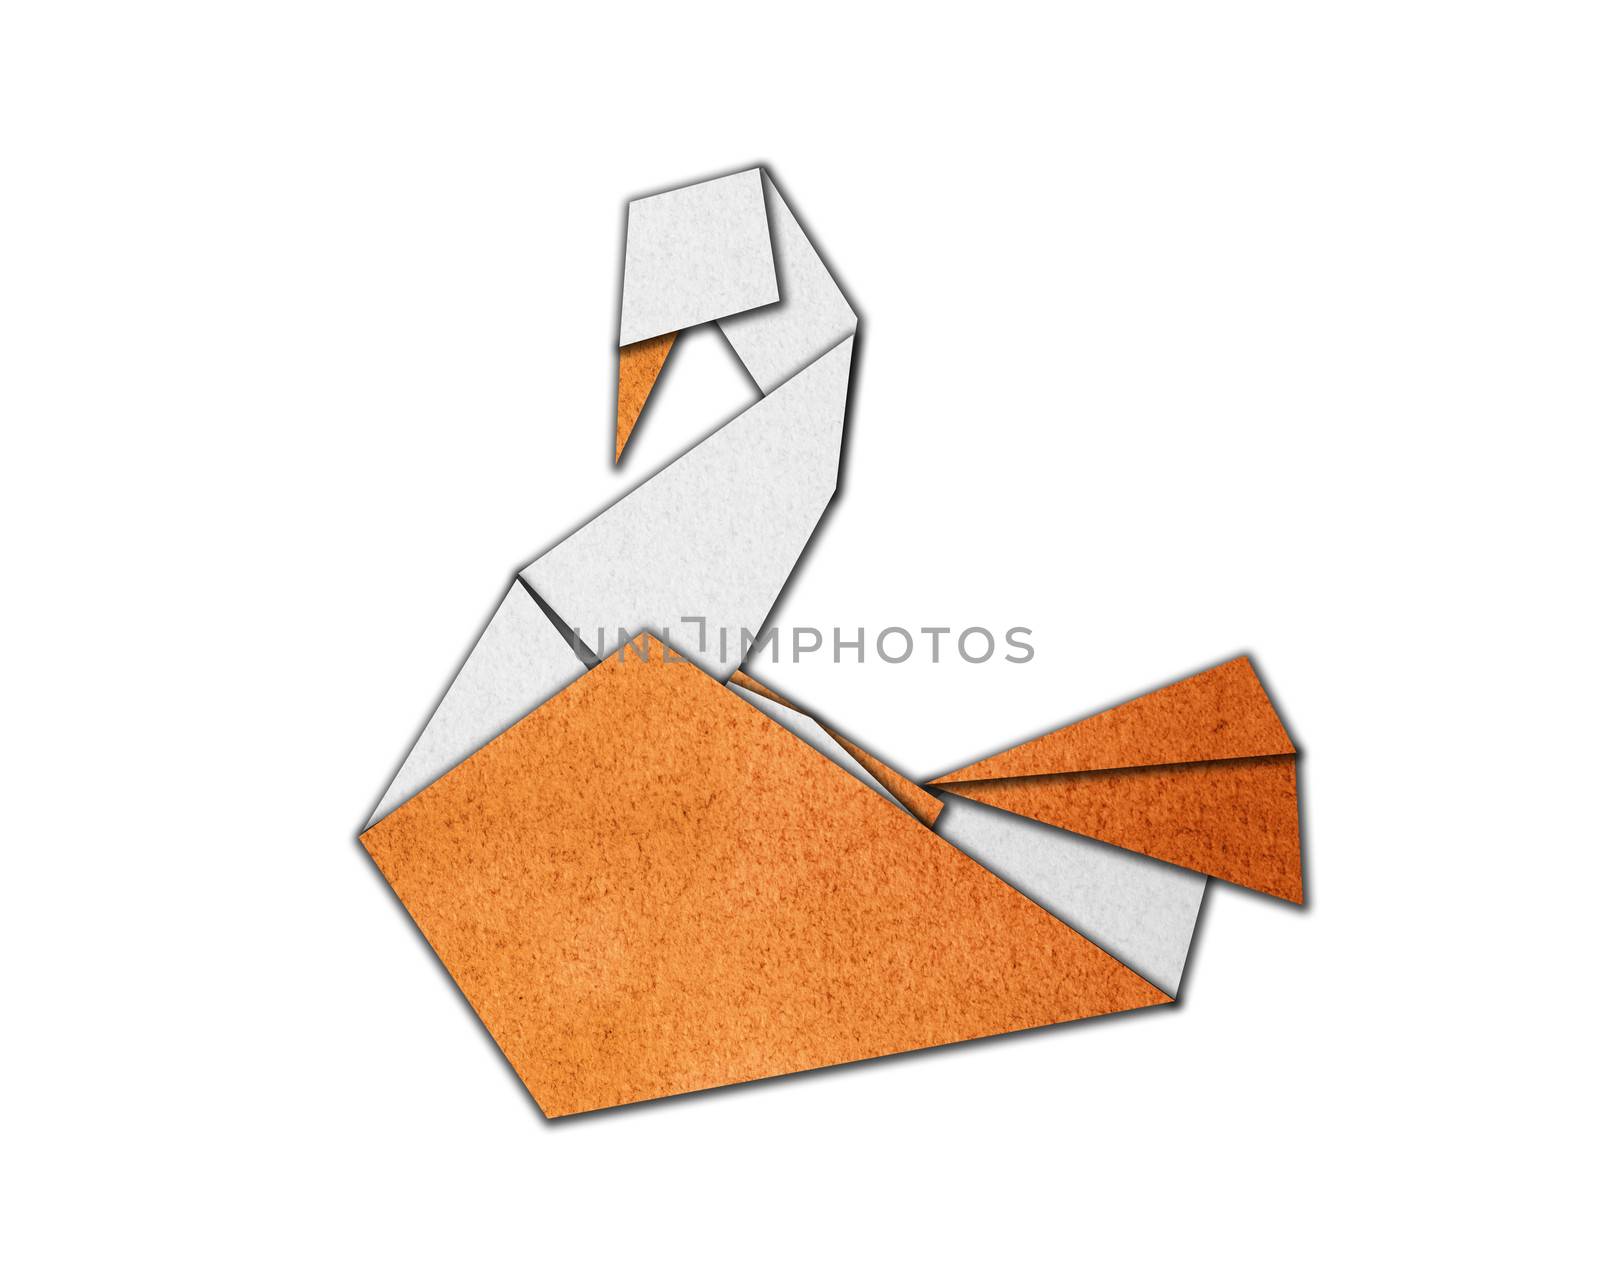 origami swan made of paper by Sorapop